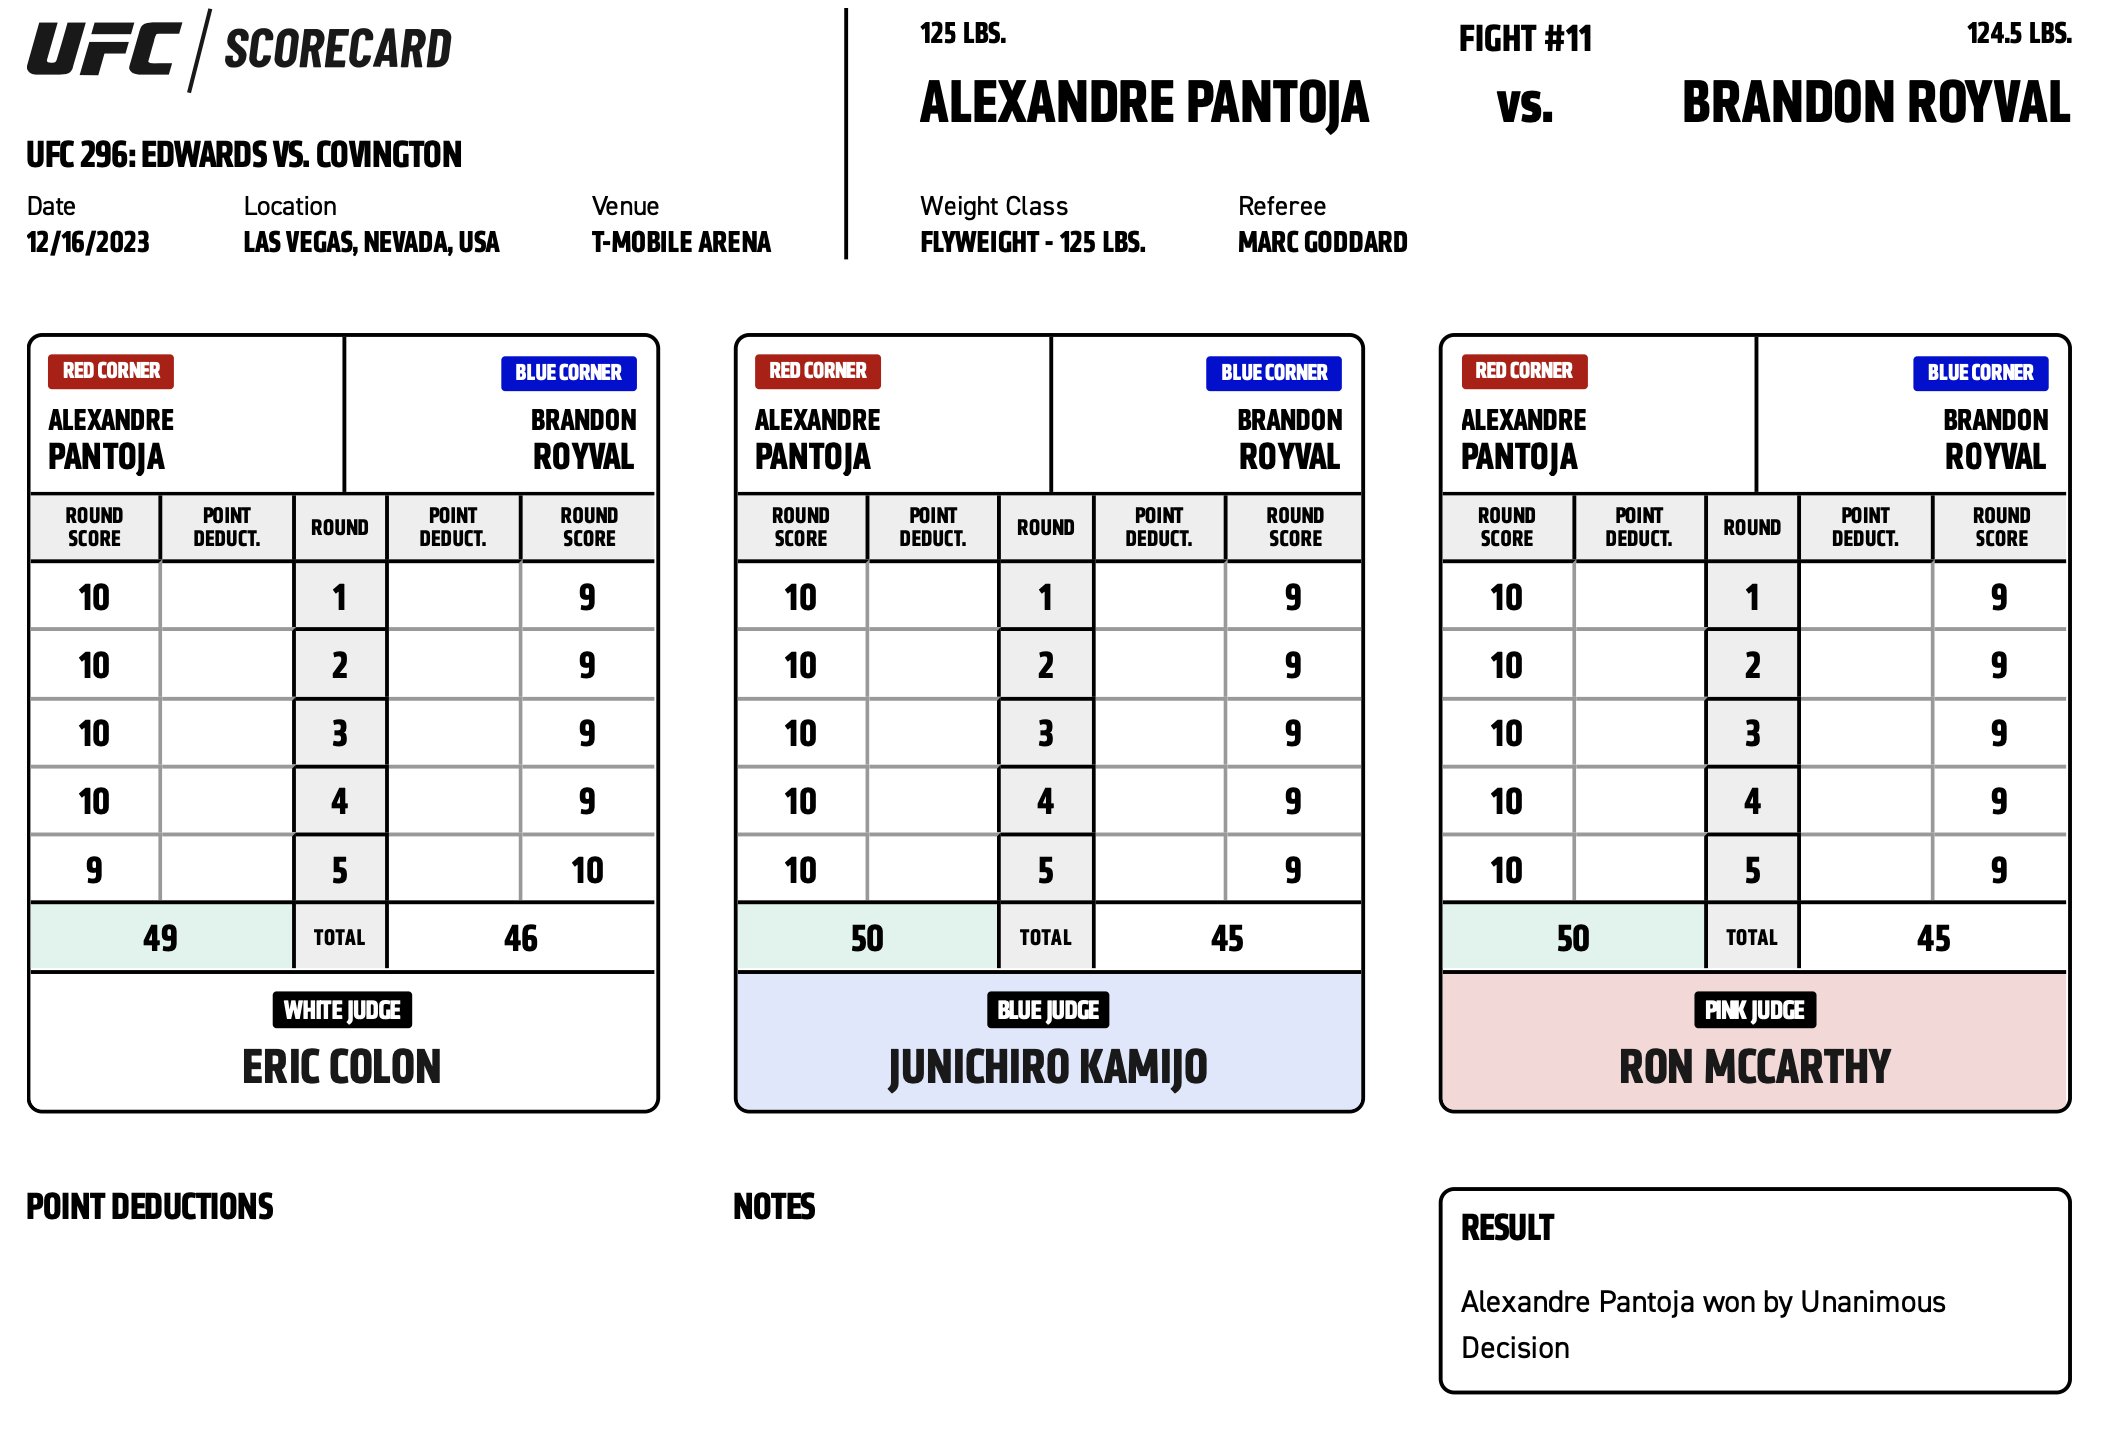 Scorecard : UFC 296 - Alexandre Pantoja vs Brandon Royval